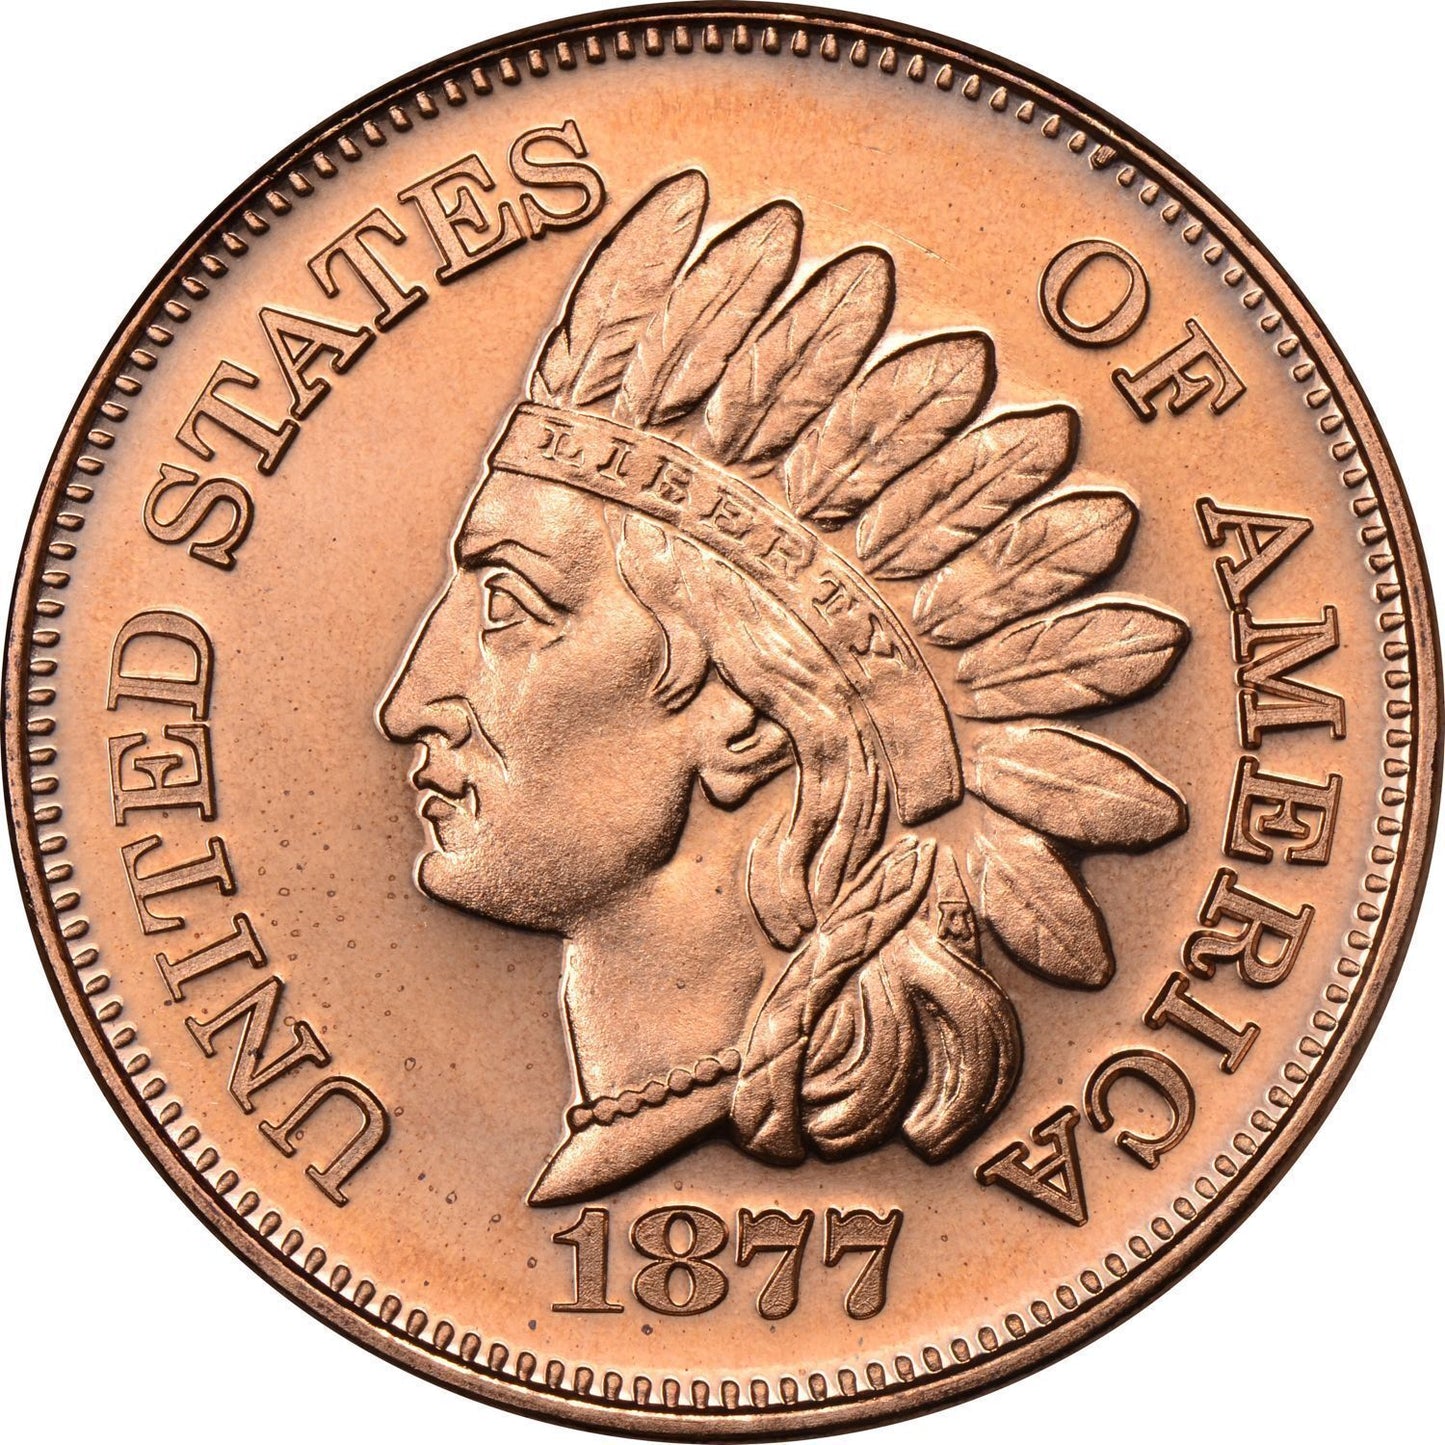 1 Oz. Copper Bullion Coins Wooden Box 3